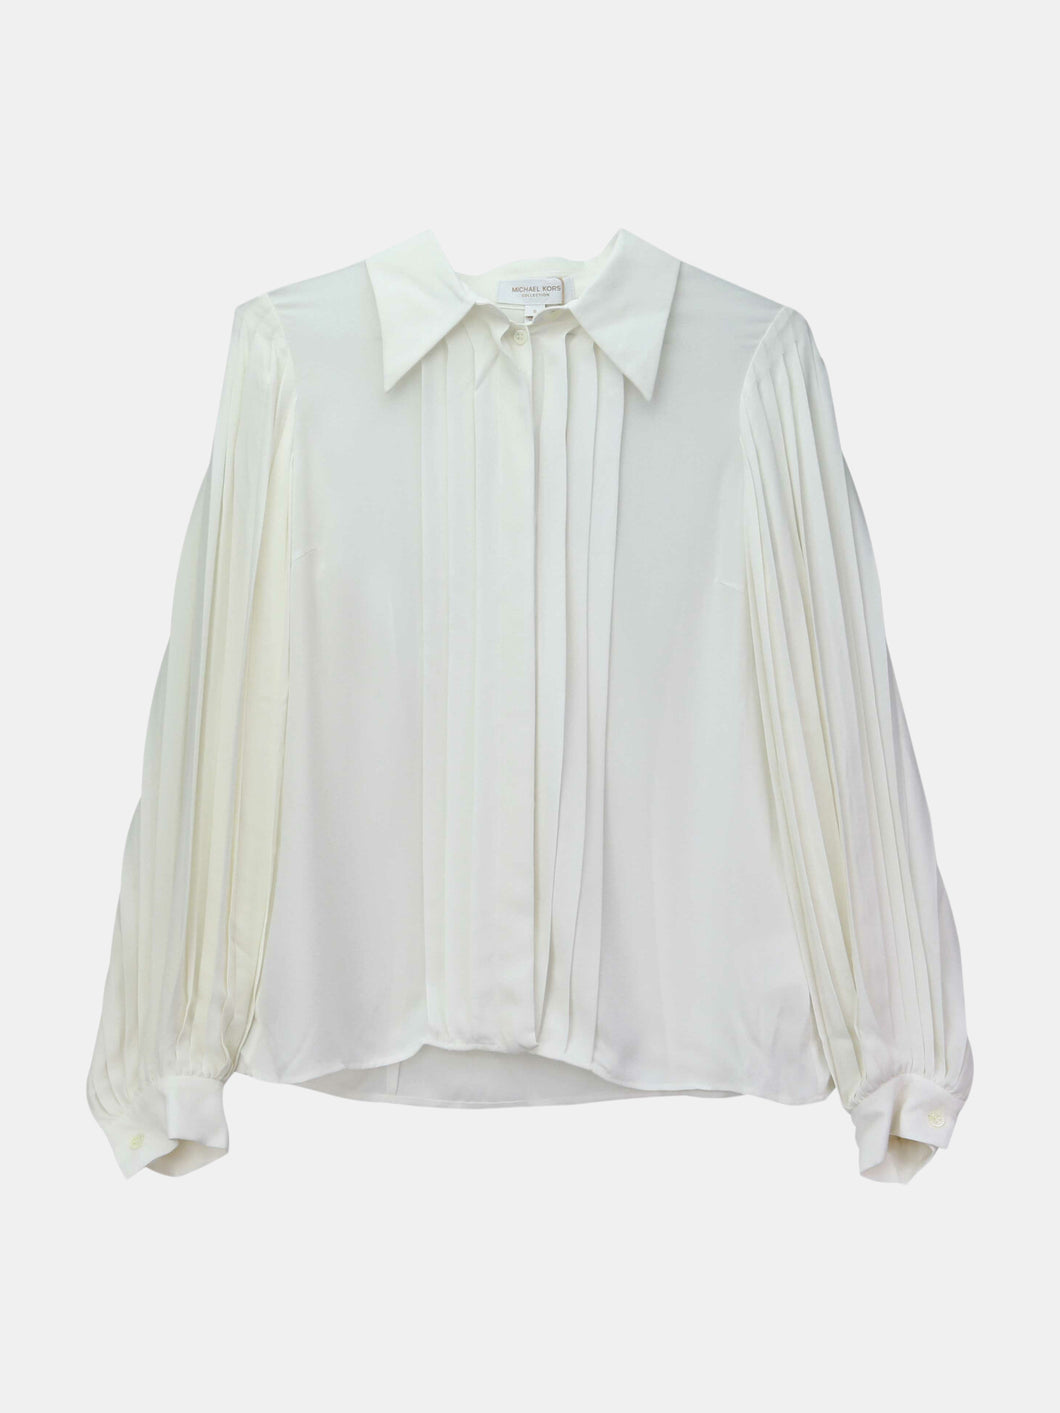 Michael Kors Women's White Silk georgette puff sleeve shirt Blouse